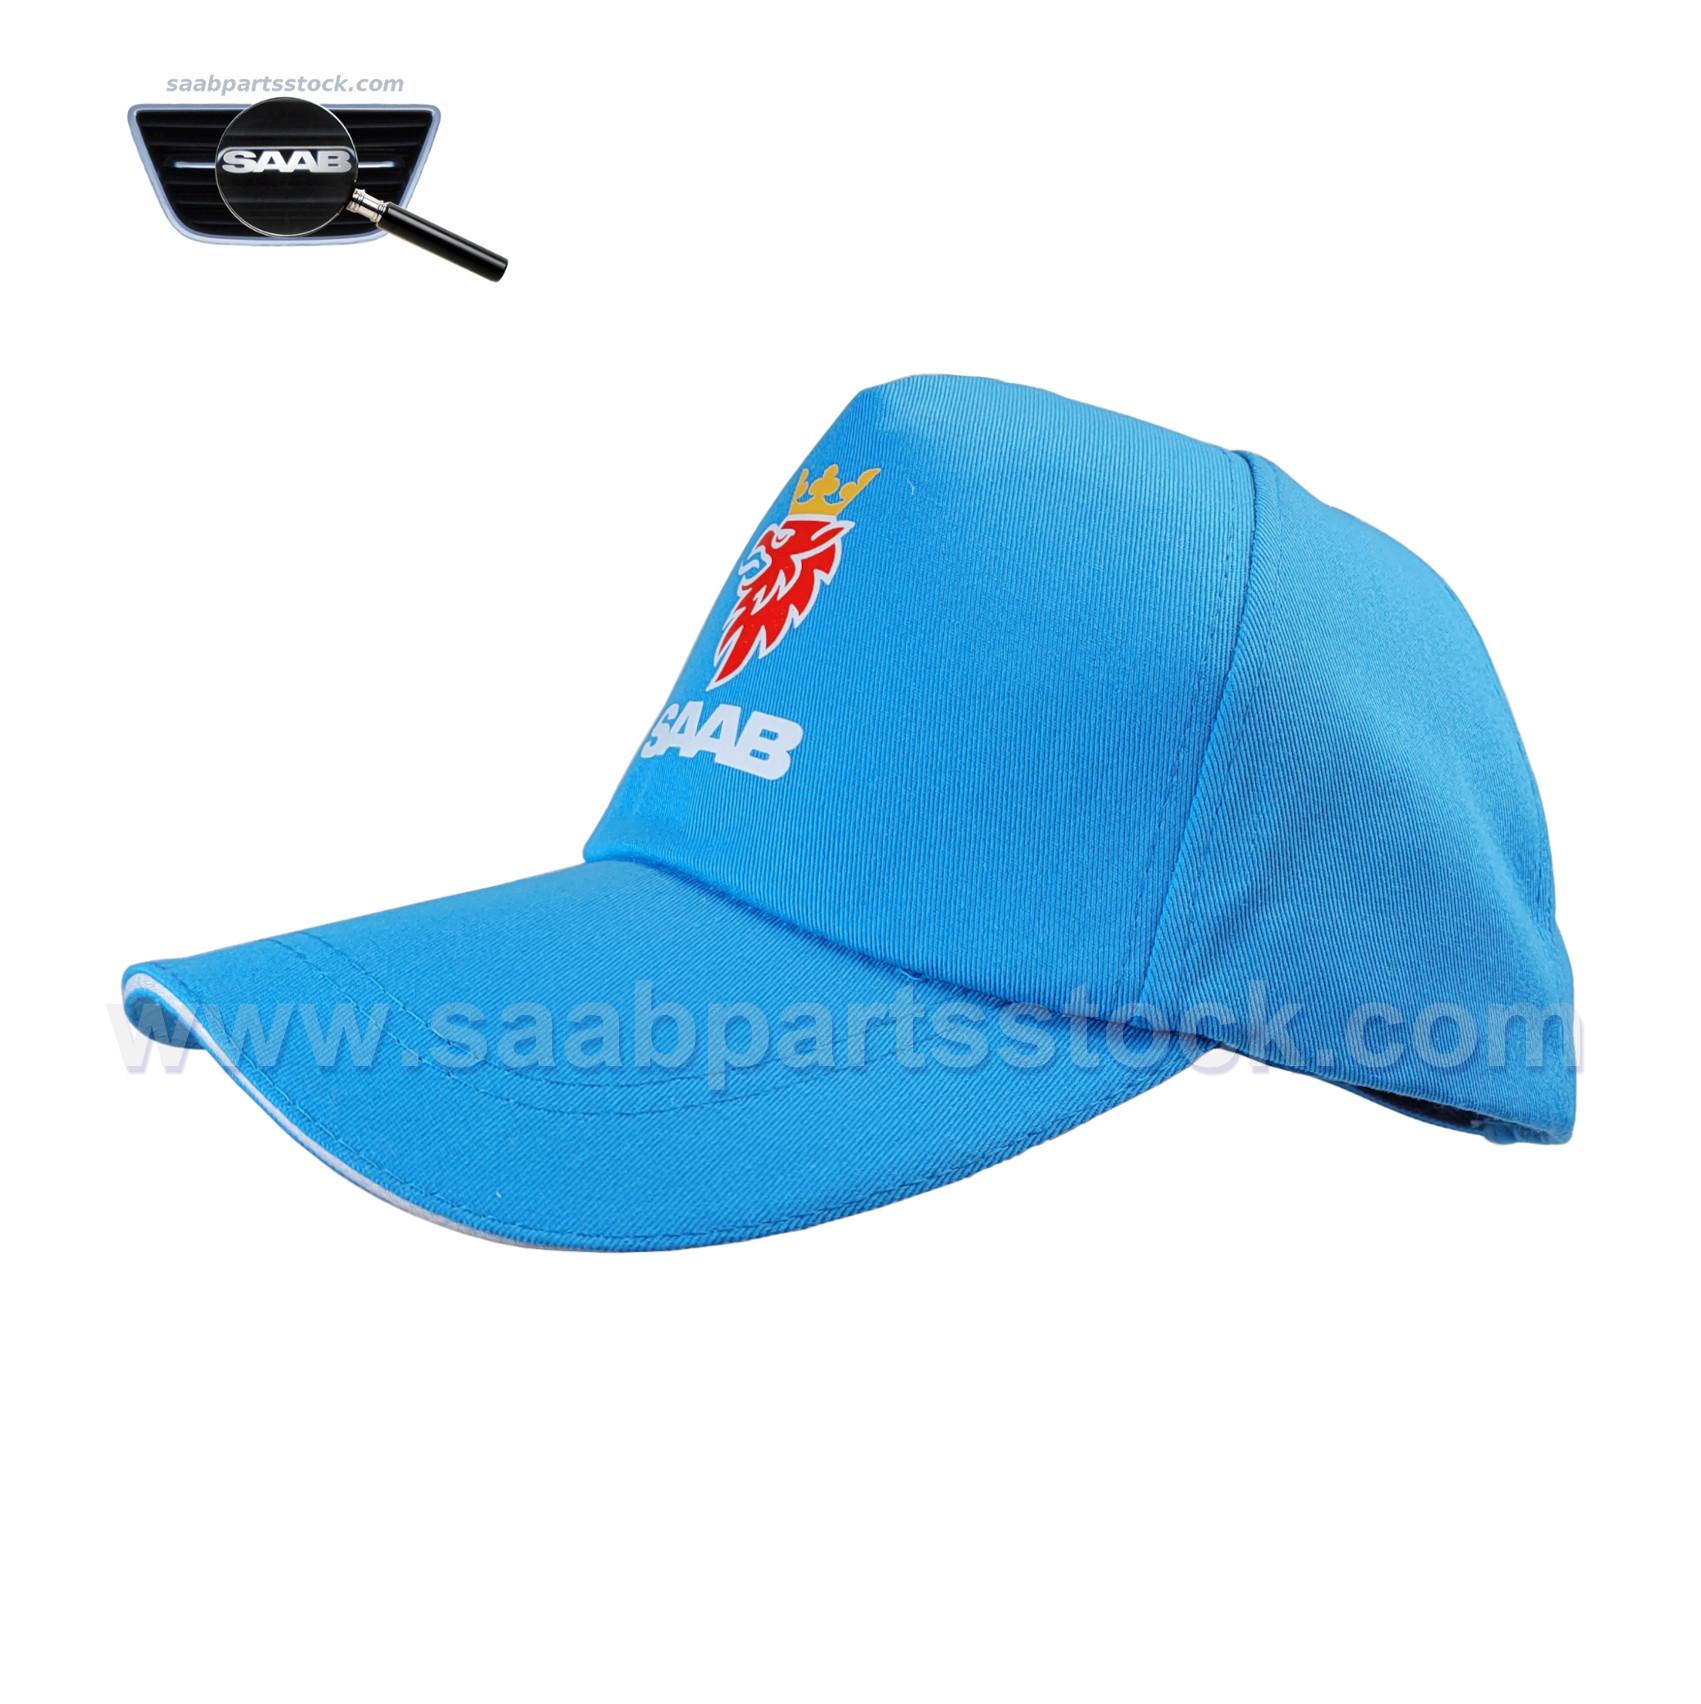 Baseball Cap With SAAB logo Sky Blue